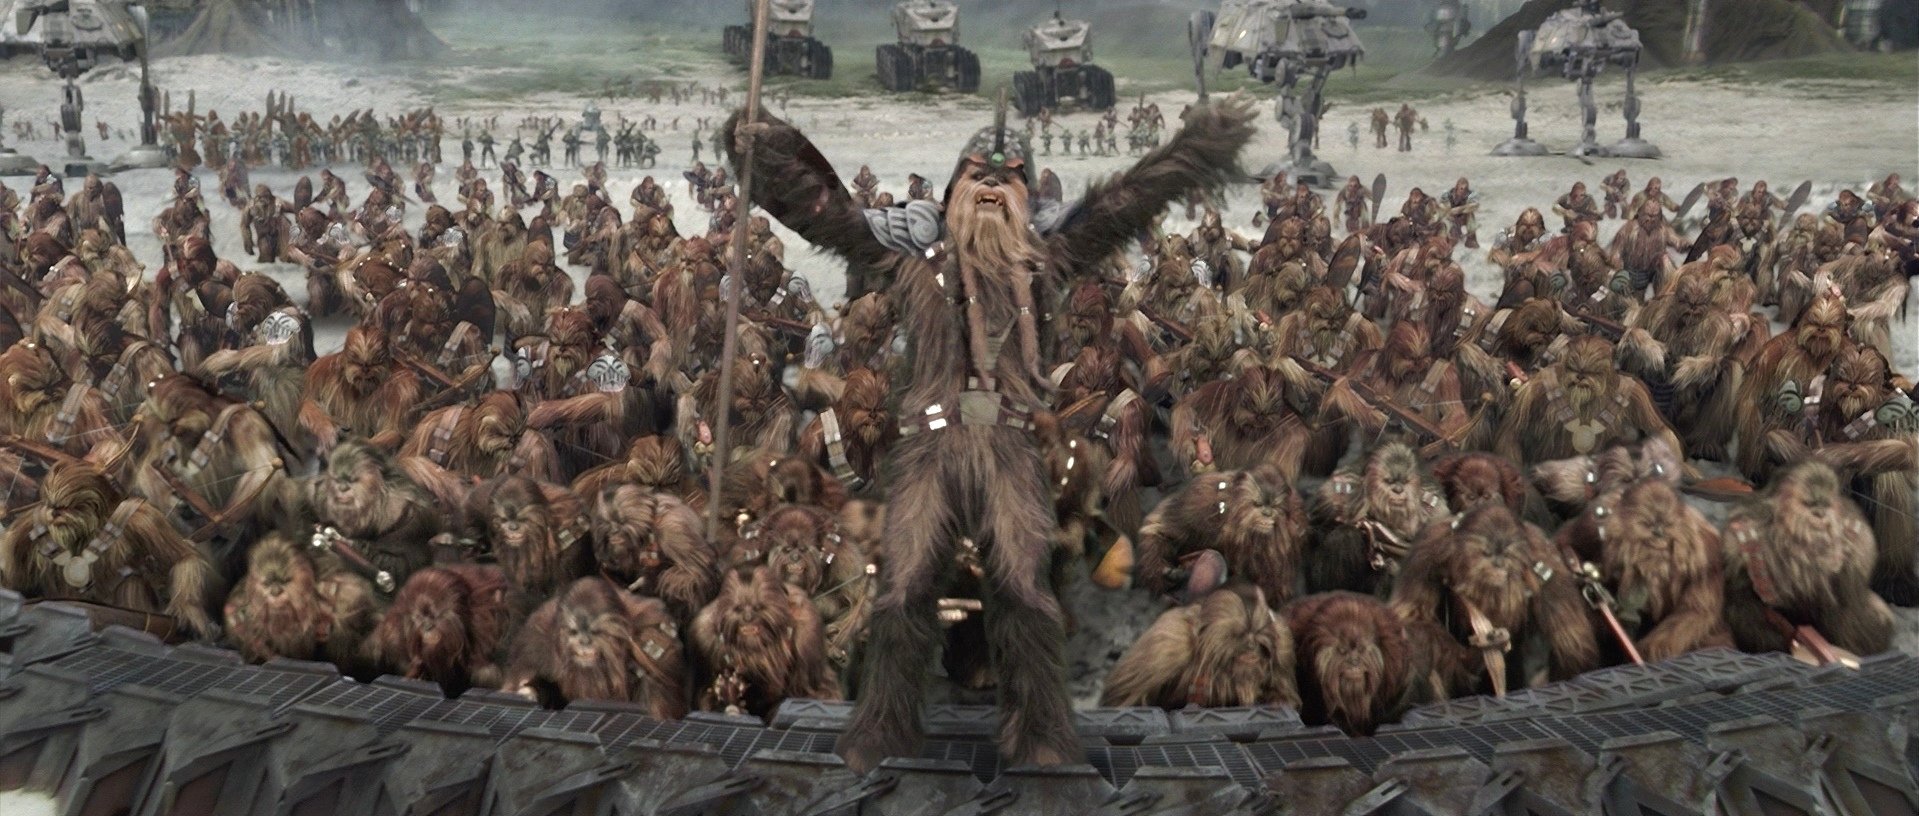 Wookie HD Wallpaper Background Image